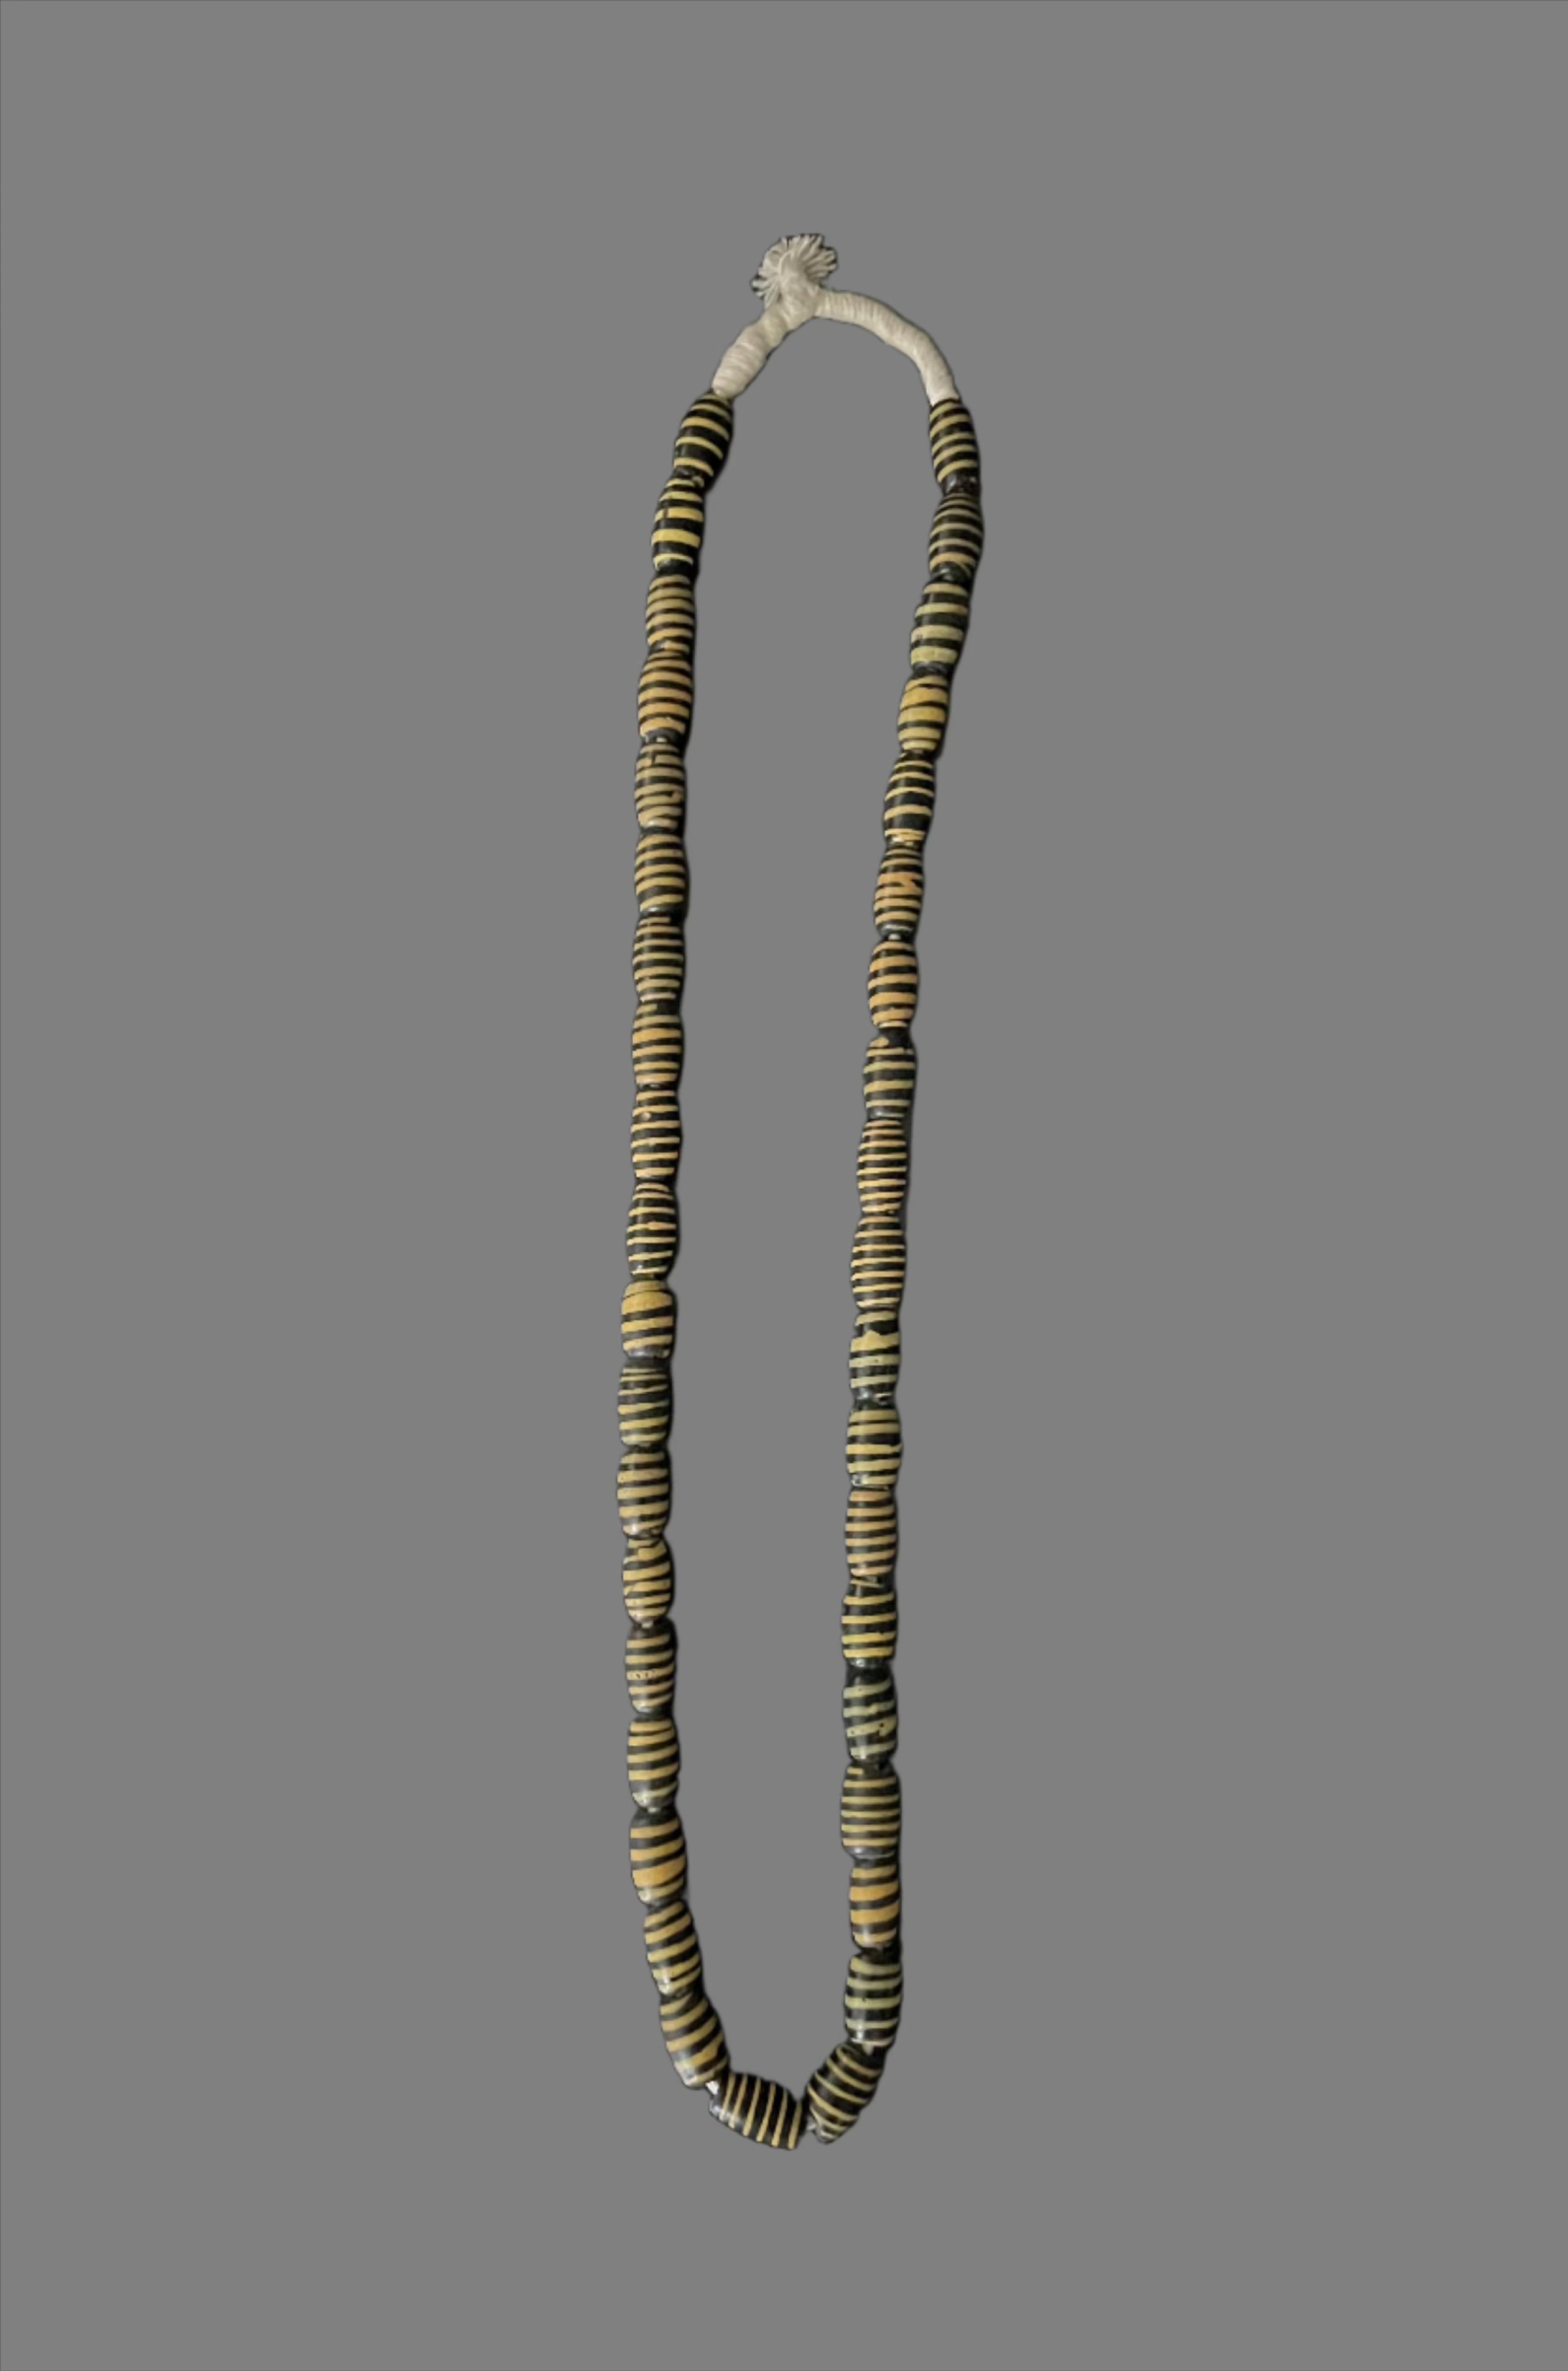 Tribal Trade Beads - African Plural Art - African Art - Beads - Embellishments - Trims - Yellow Black Striped Old Beads,Venetian African Trade Beads